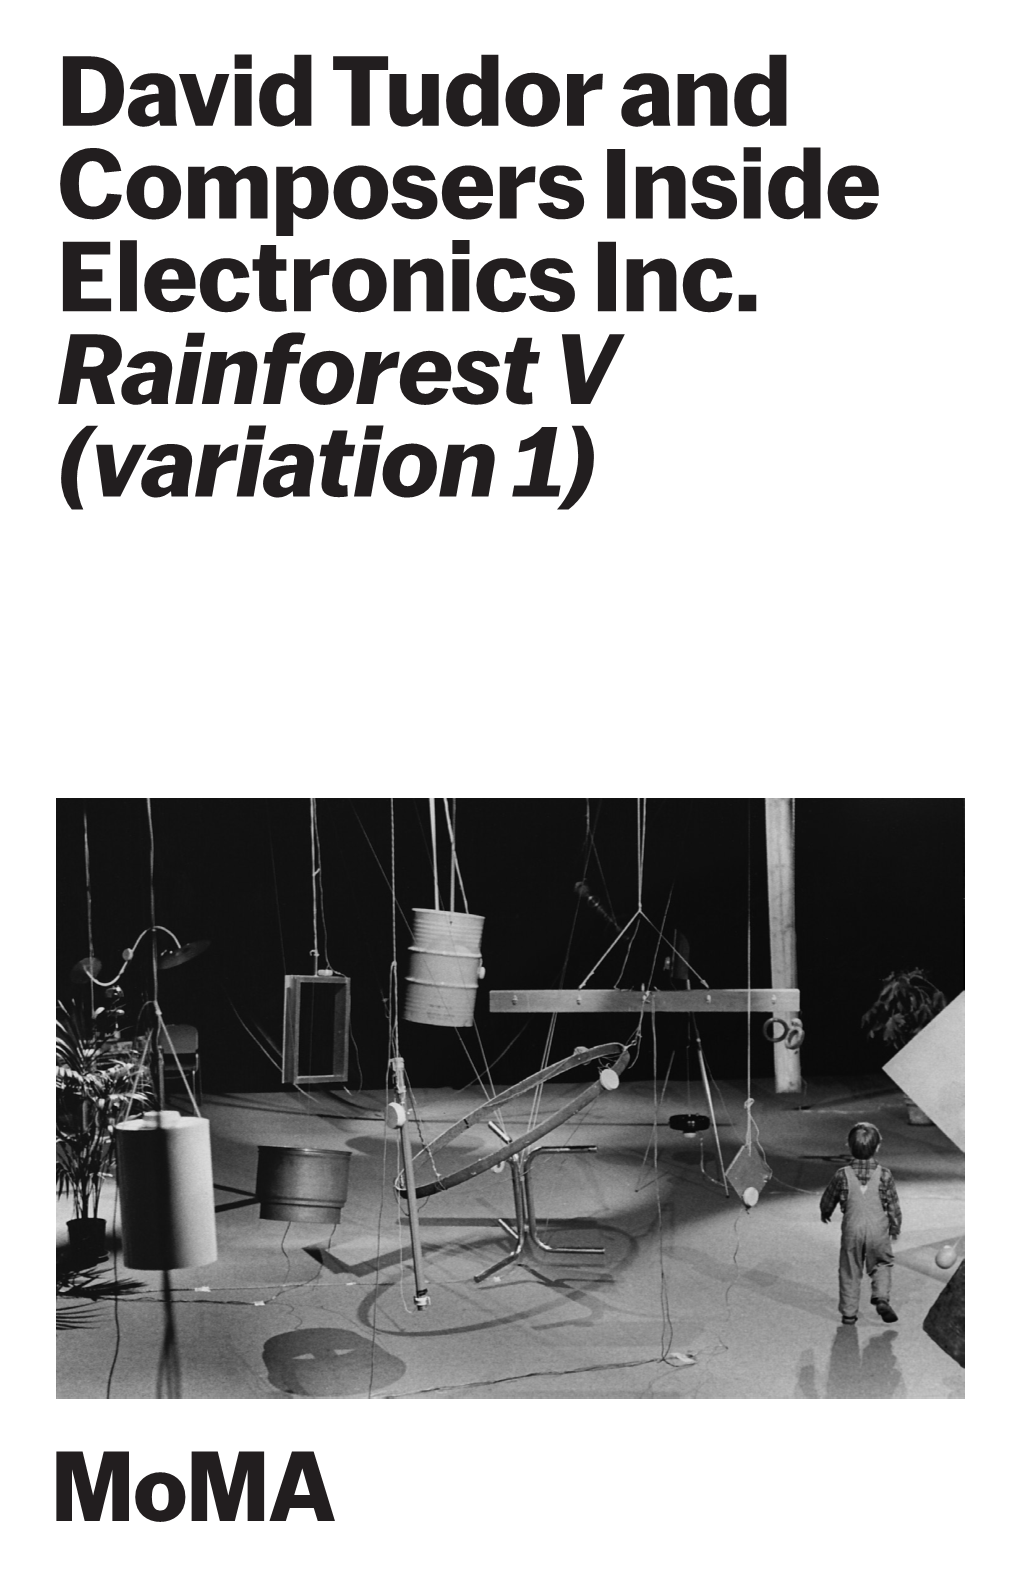 1 David Tudor and Composers Inside Electronics Inc. Rainforest V (Variation 1)